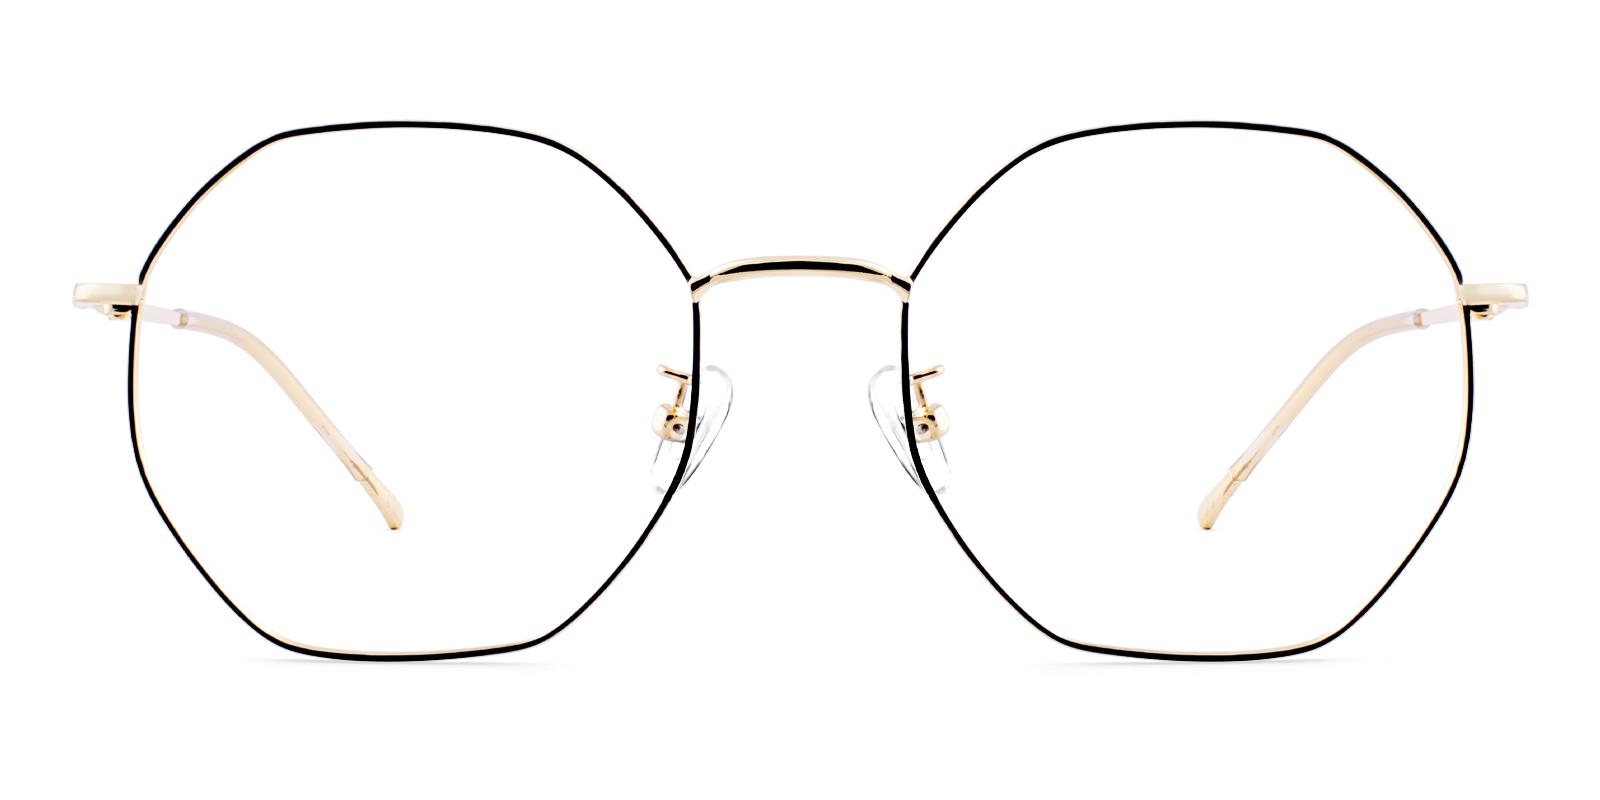 Salieur Gold Metal Eyeglasses , NosePads Frames from ABBE Glasses